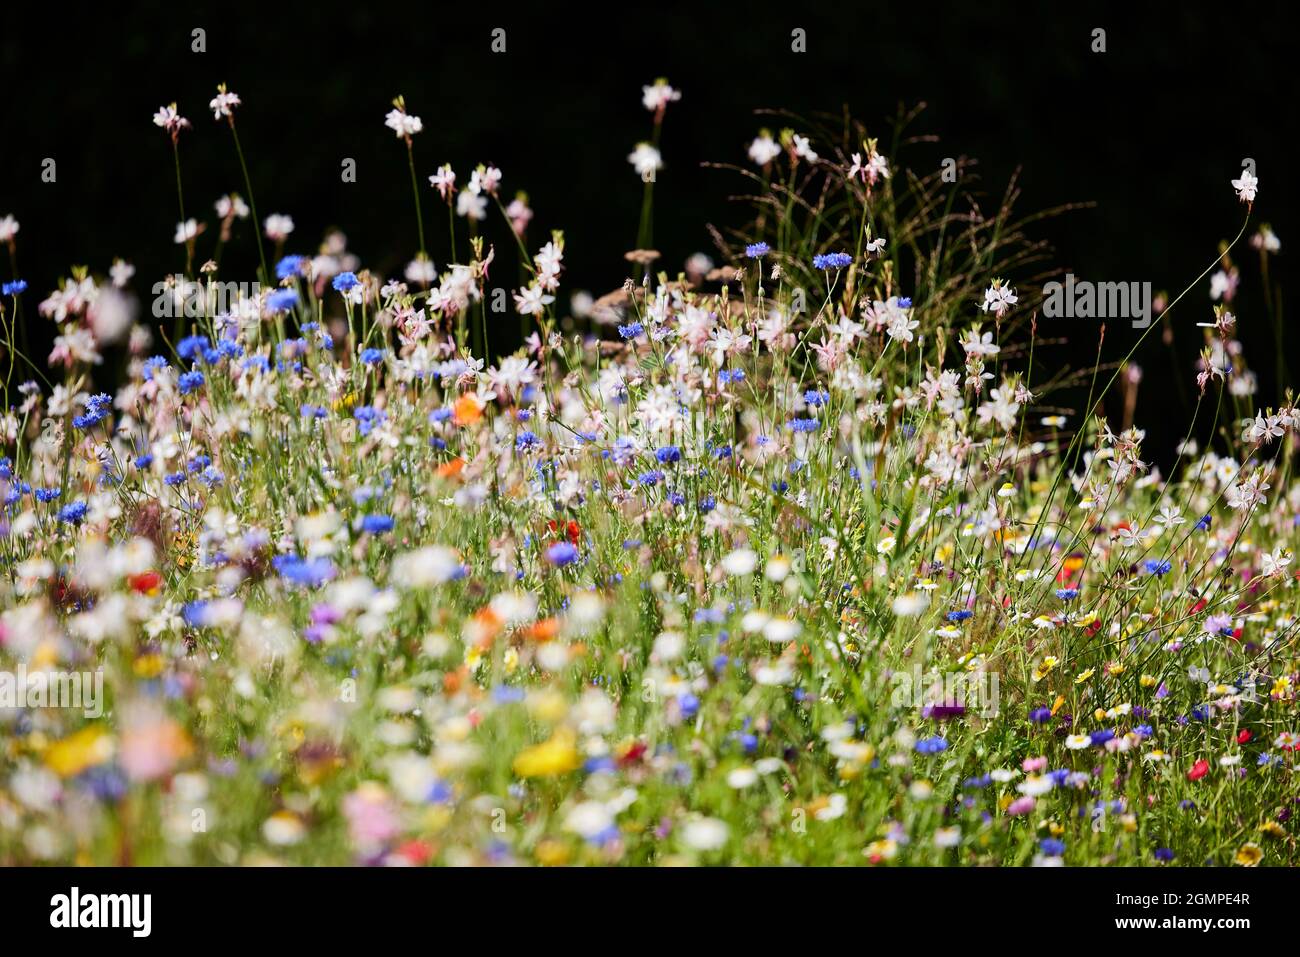 Primer plano de hermoso campo colorido de flores silvestres en crecimiento Foto de stock